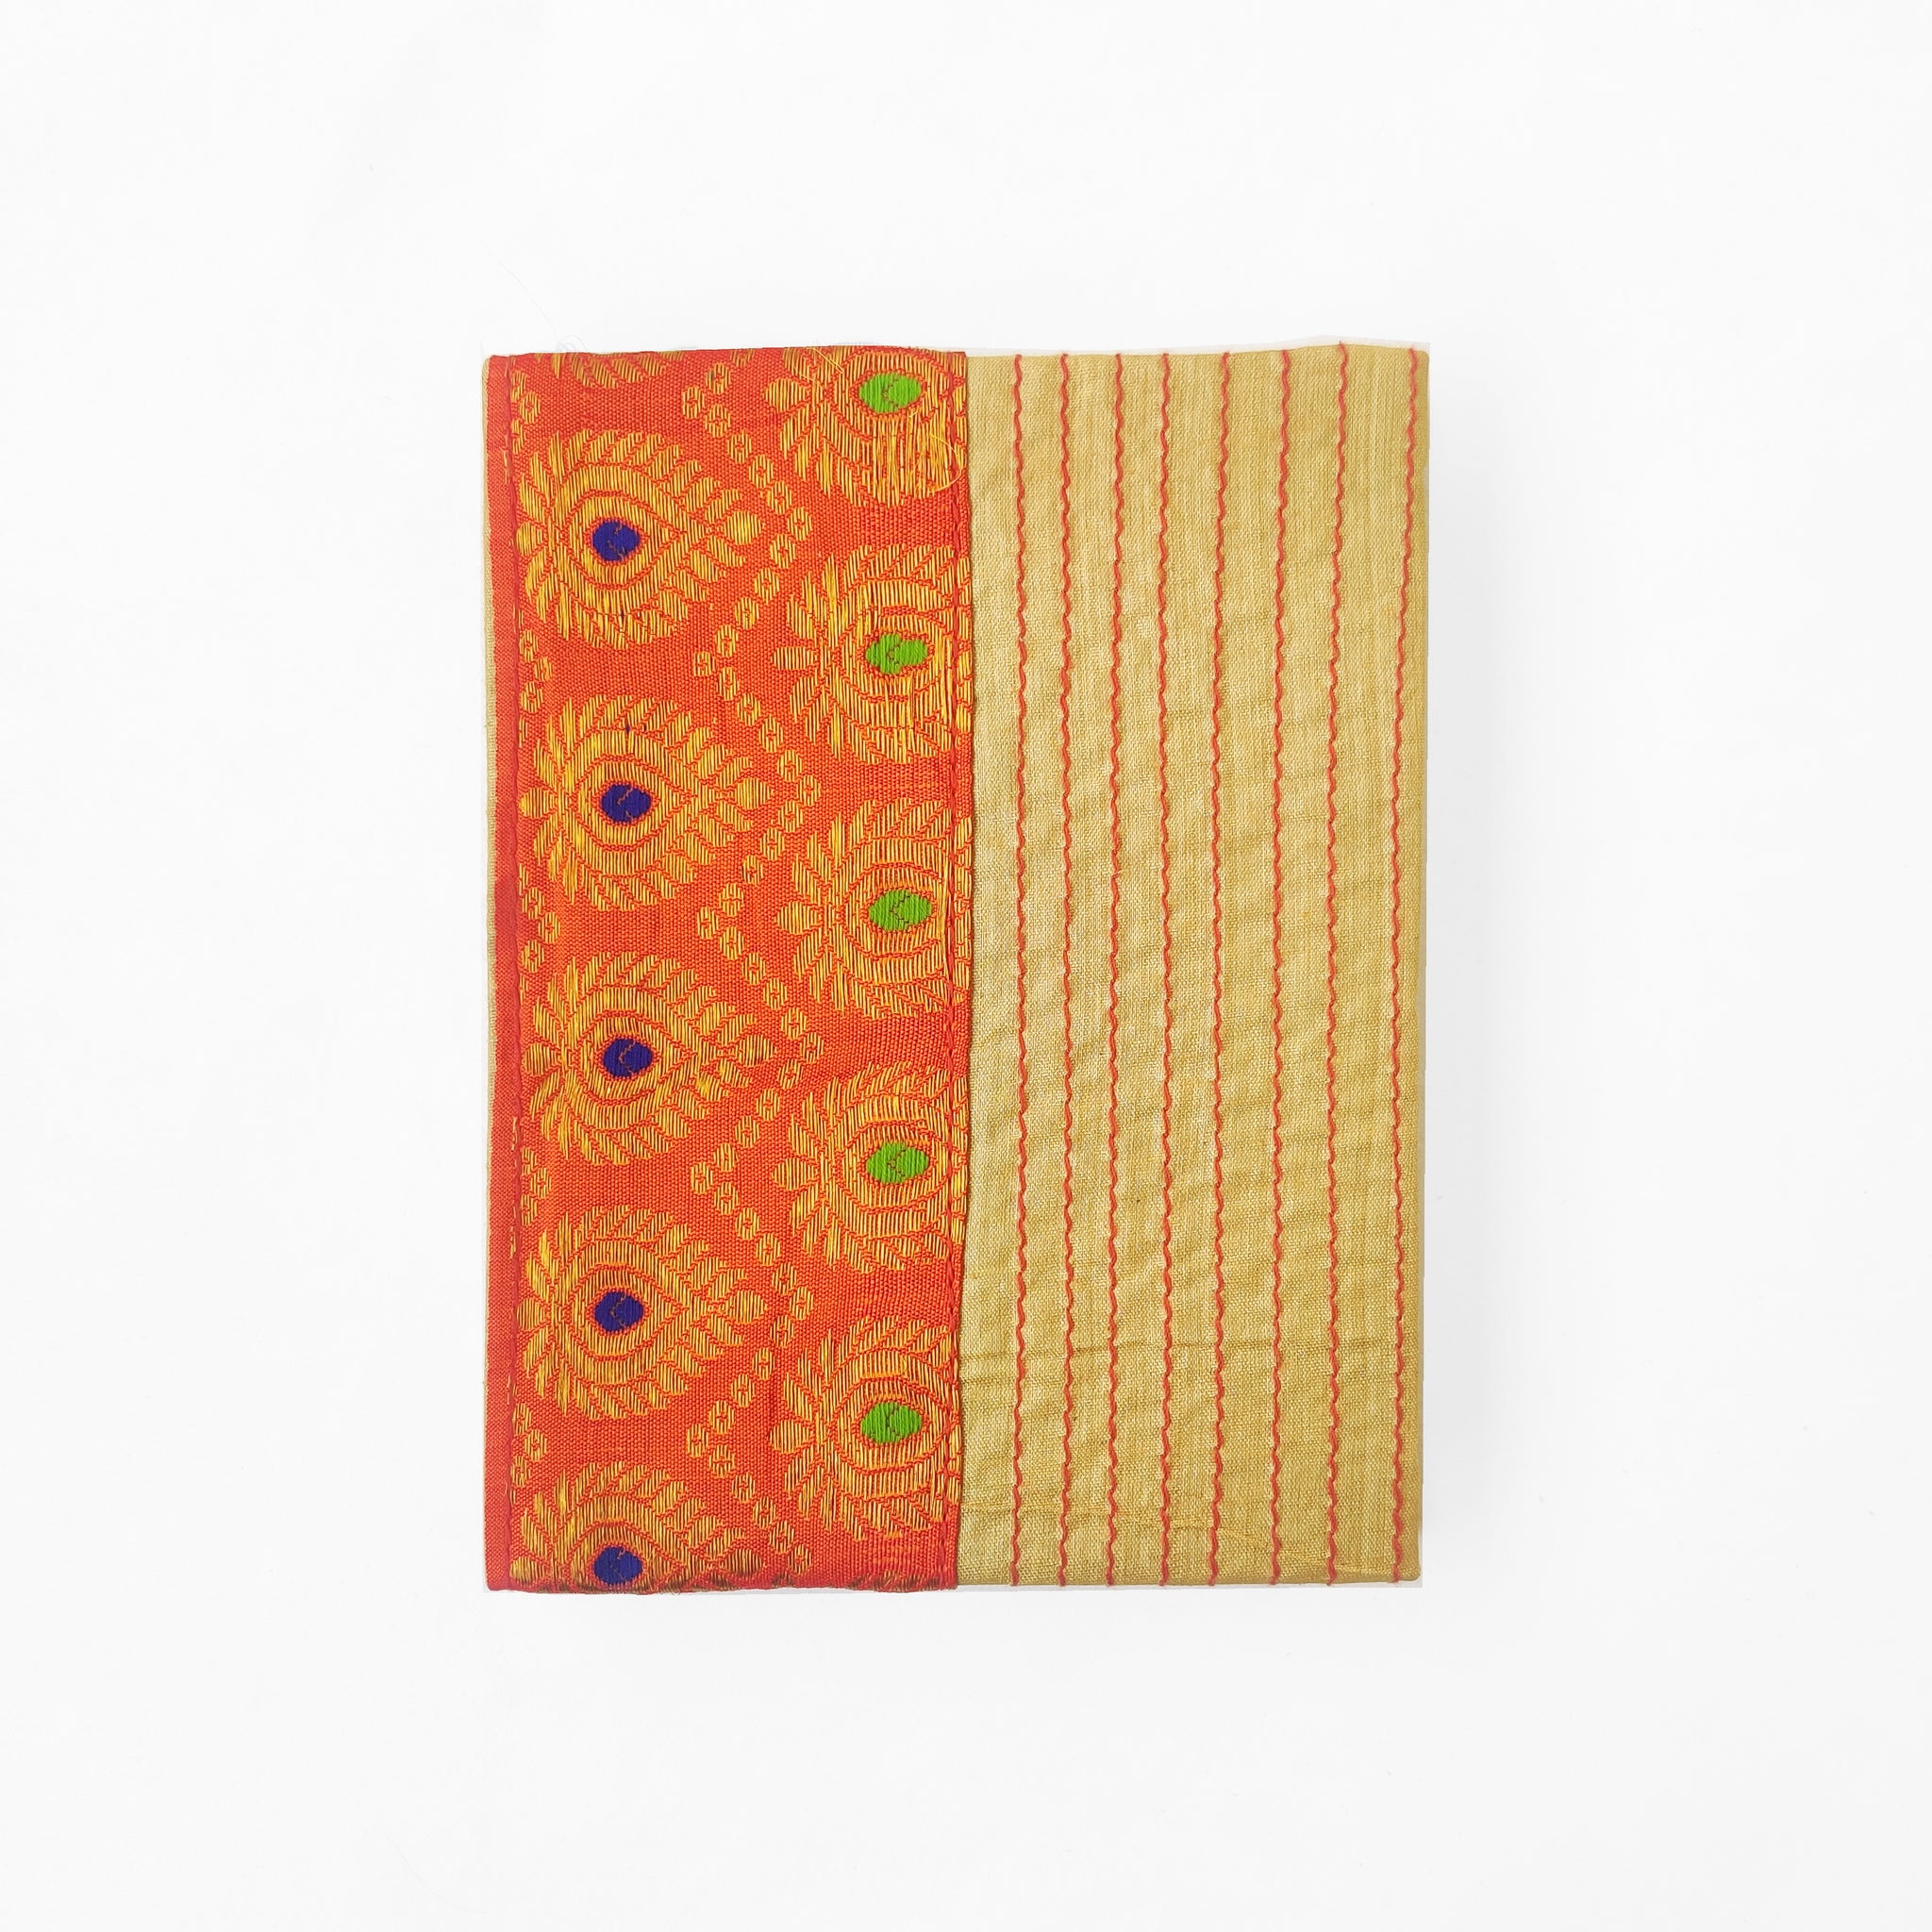 Bihu Collection Plain Notebook 6 - Small (A6)